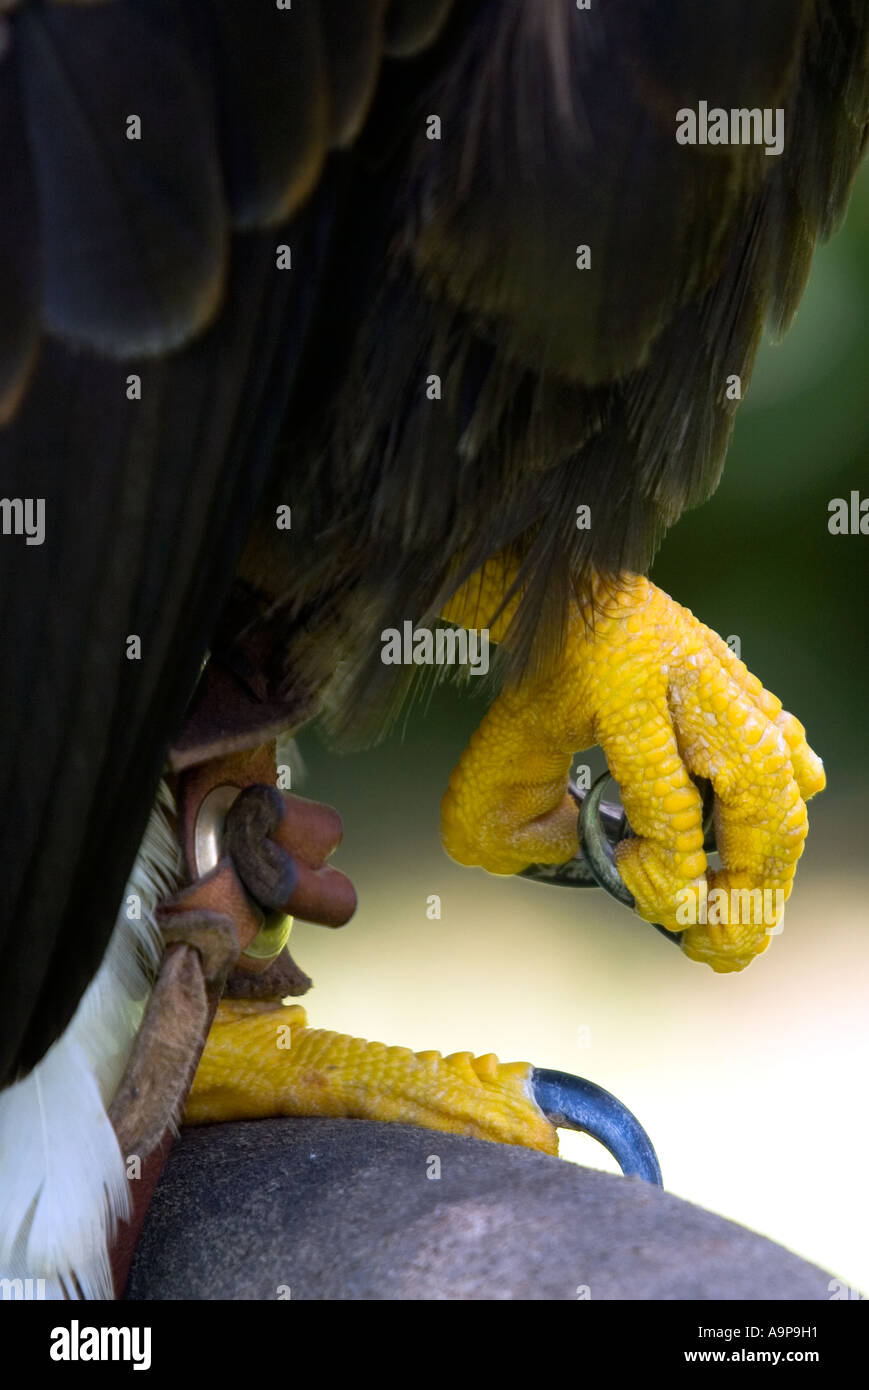 Bird of prey talons gripping perch Stock Photo